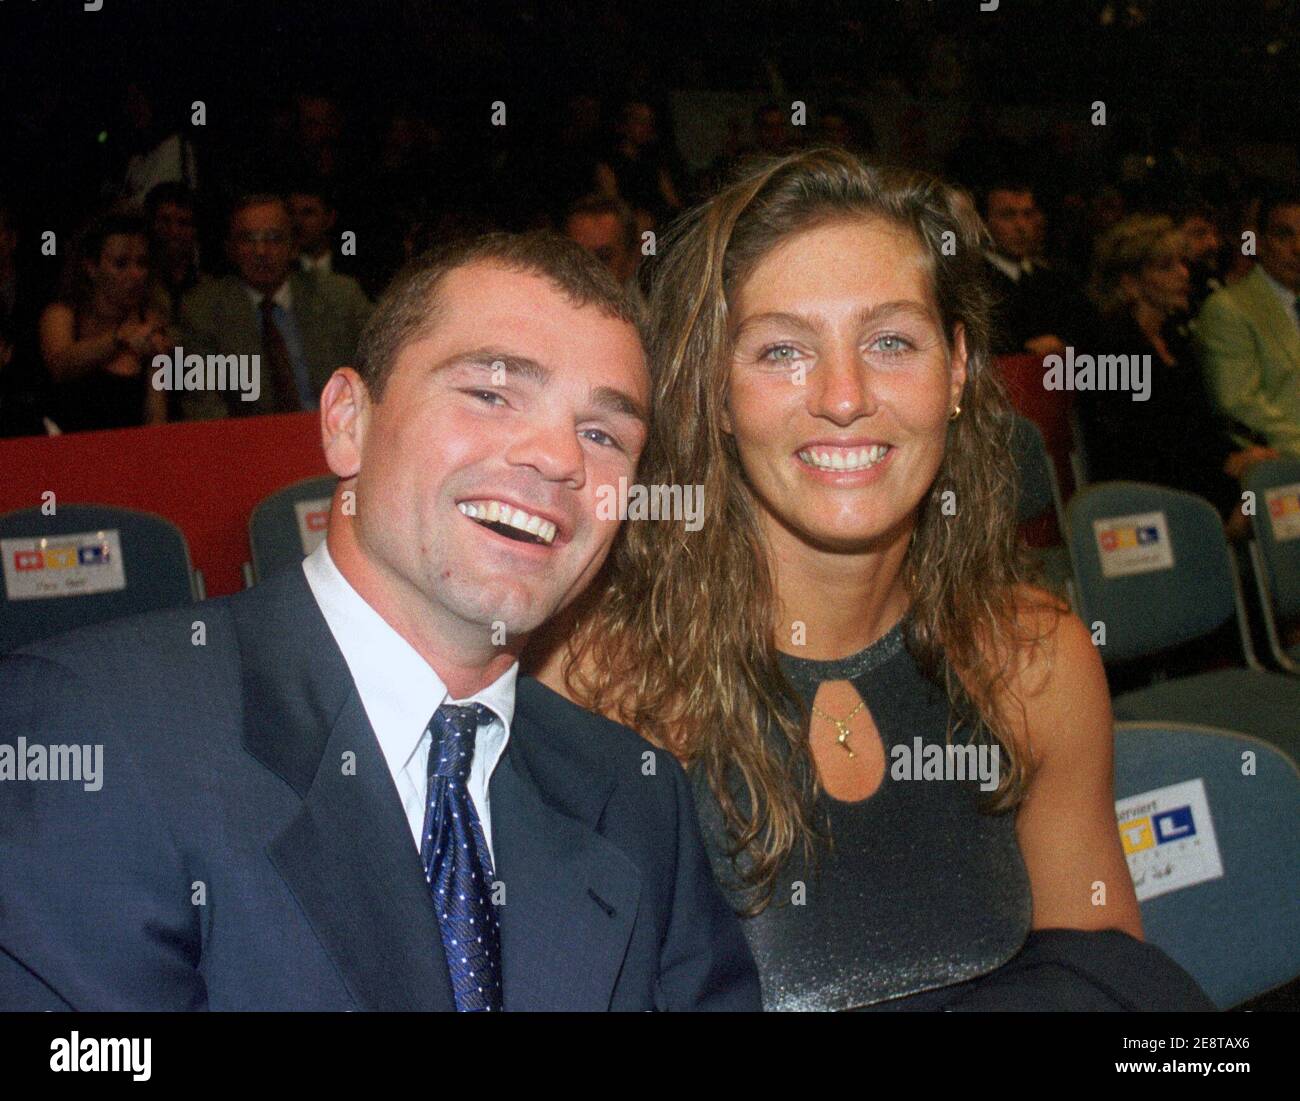 Koeln Arena Cologne Germany 25.9.1999, Boxing: Schulz vs Klitschko, VIP guests: boxer Sven OTTKE and wife Gabi Stock Photo